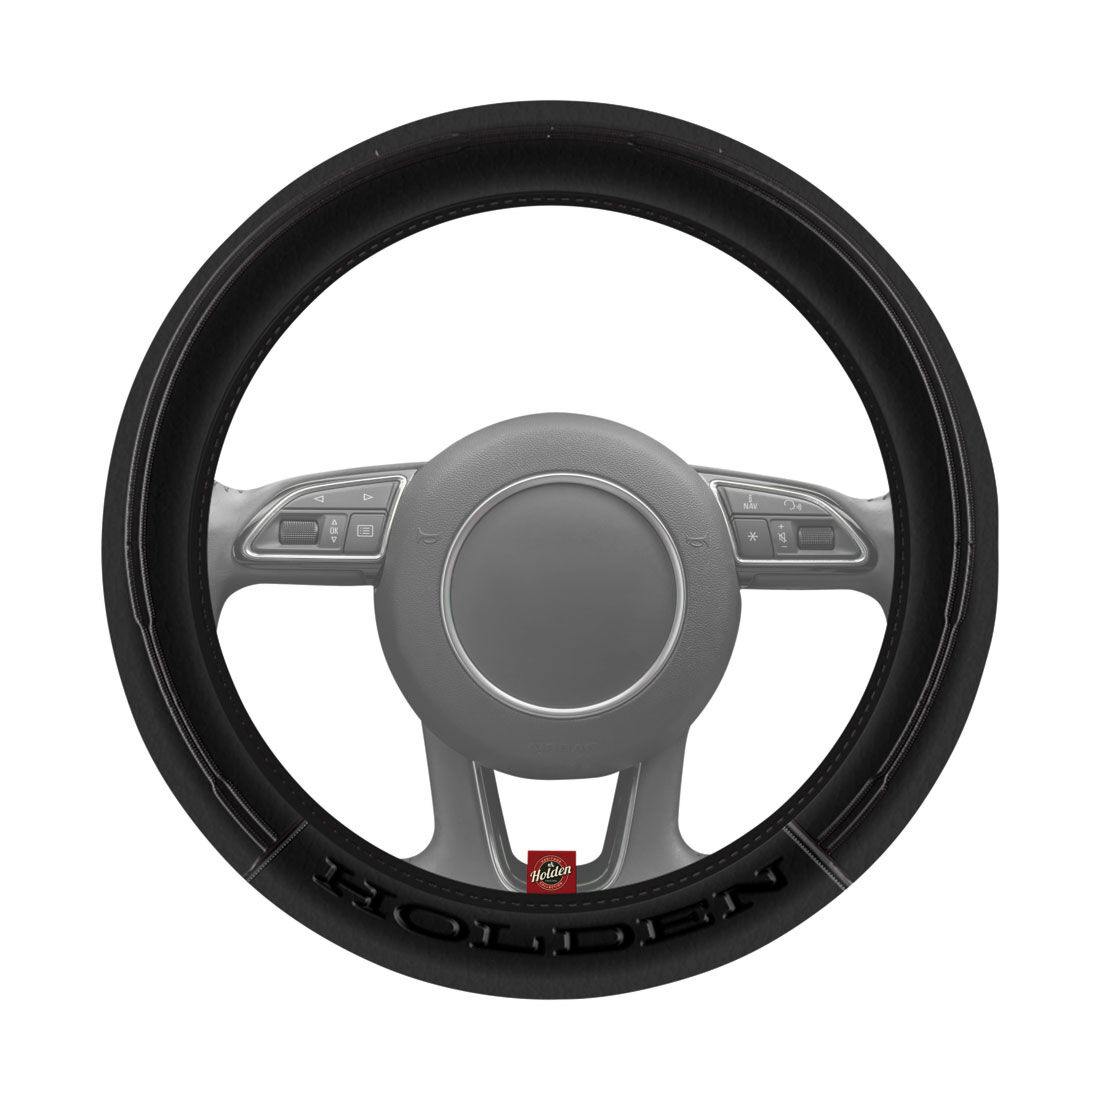 Holden Leather Look Steering Wheel Cover Black, , scaau_hi-res